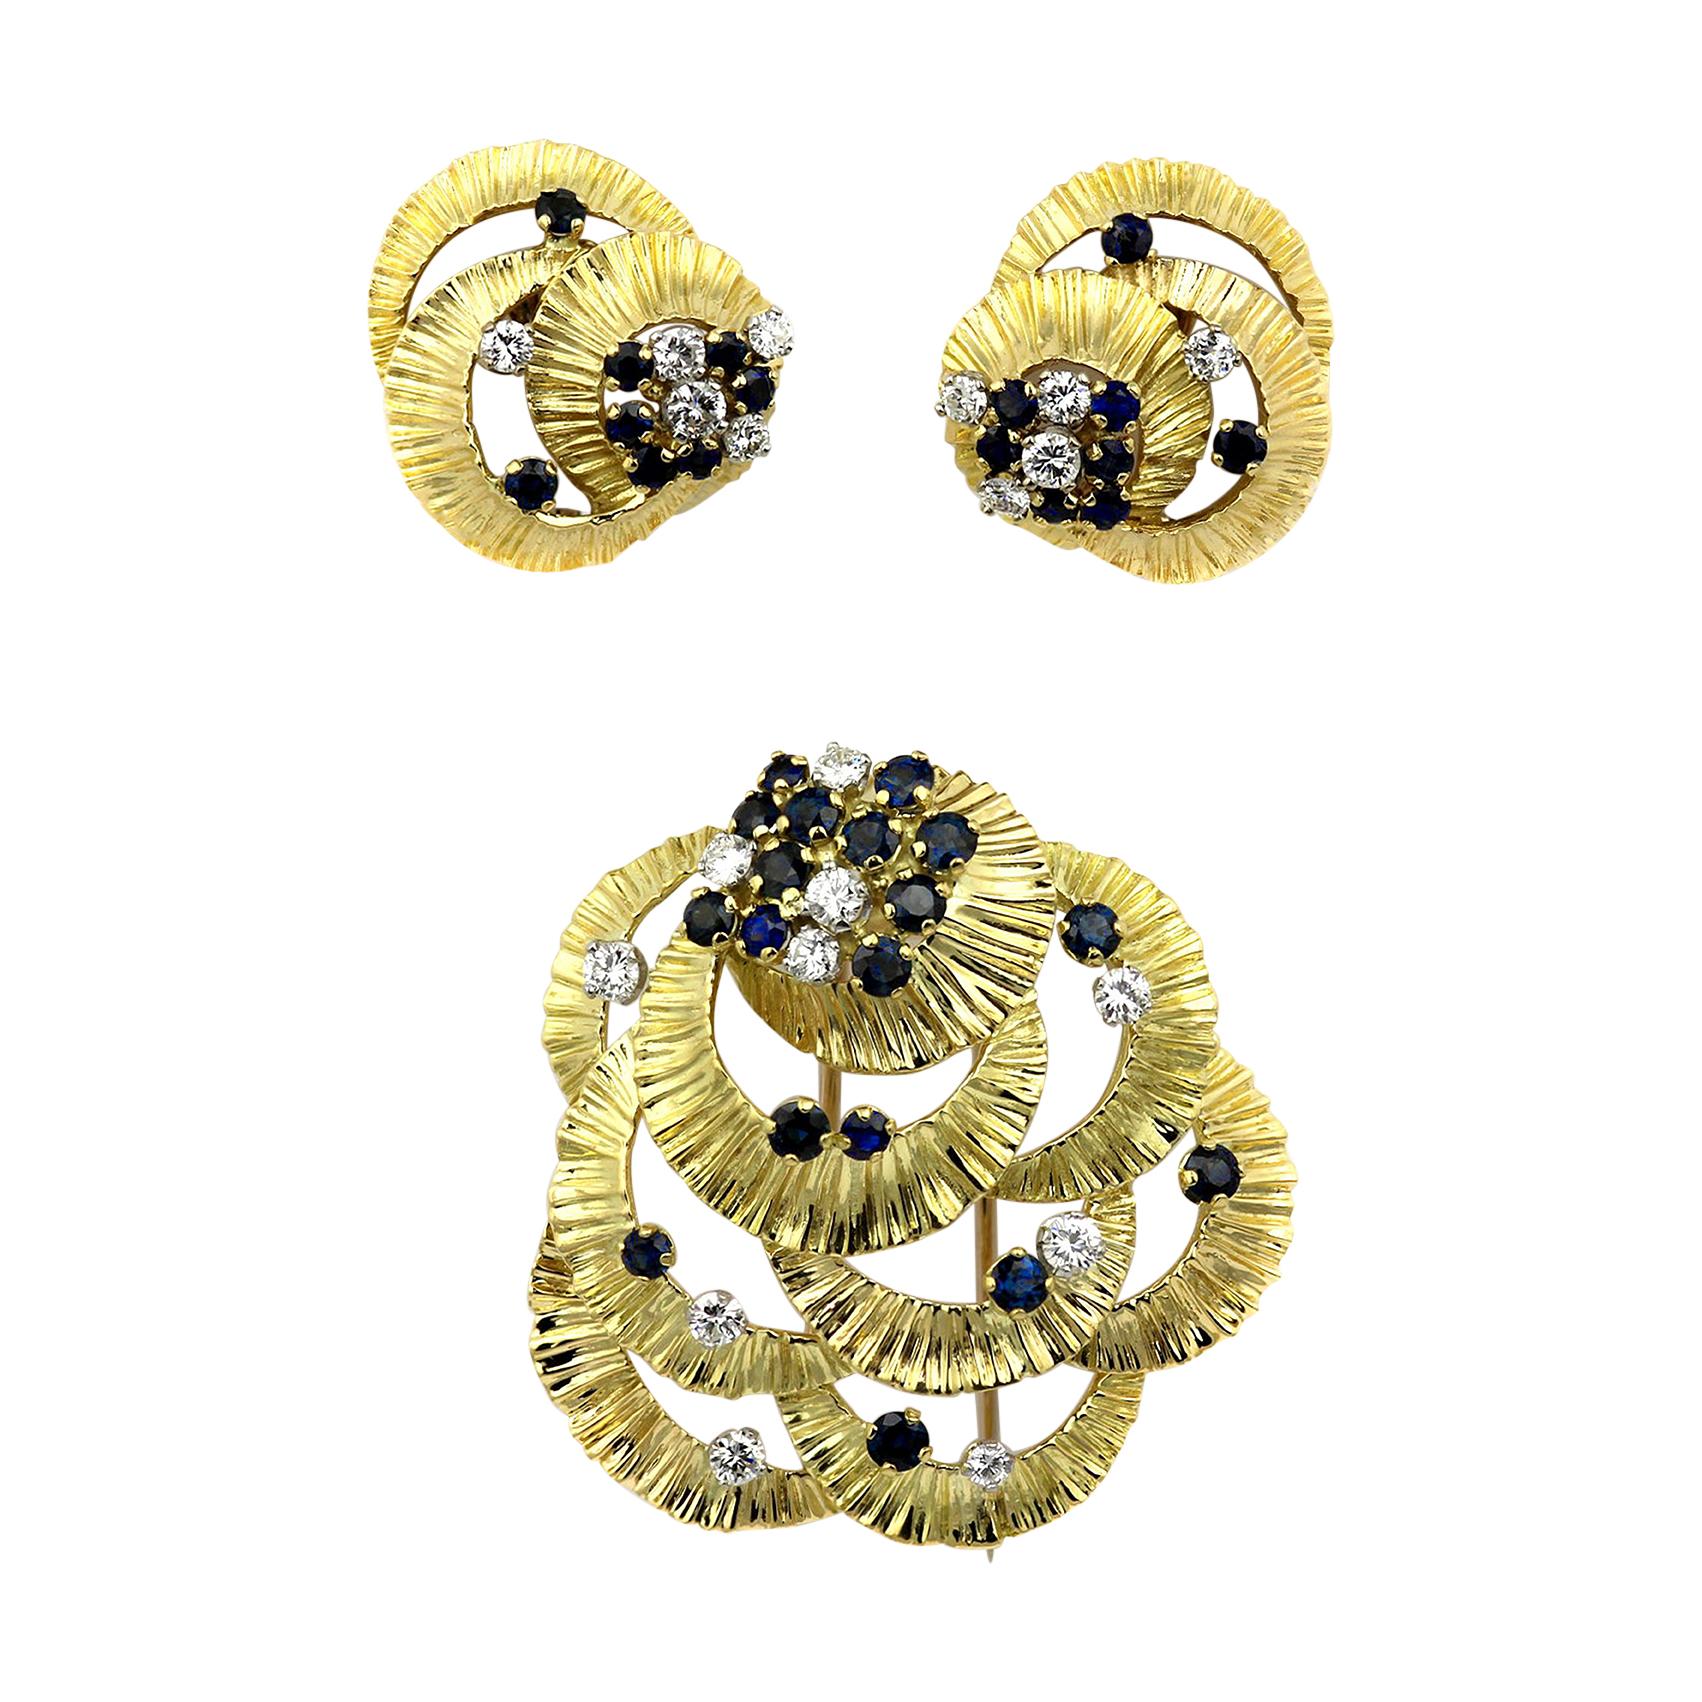 Kutchinsky Diamond and Sapphire Earrings and Matching Brooch, Retro Vintage